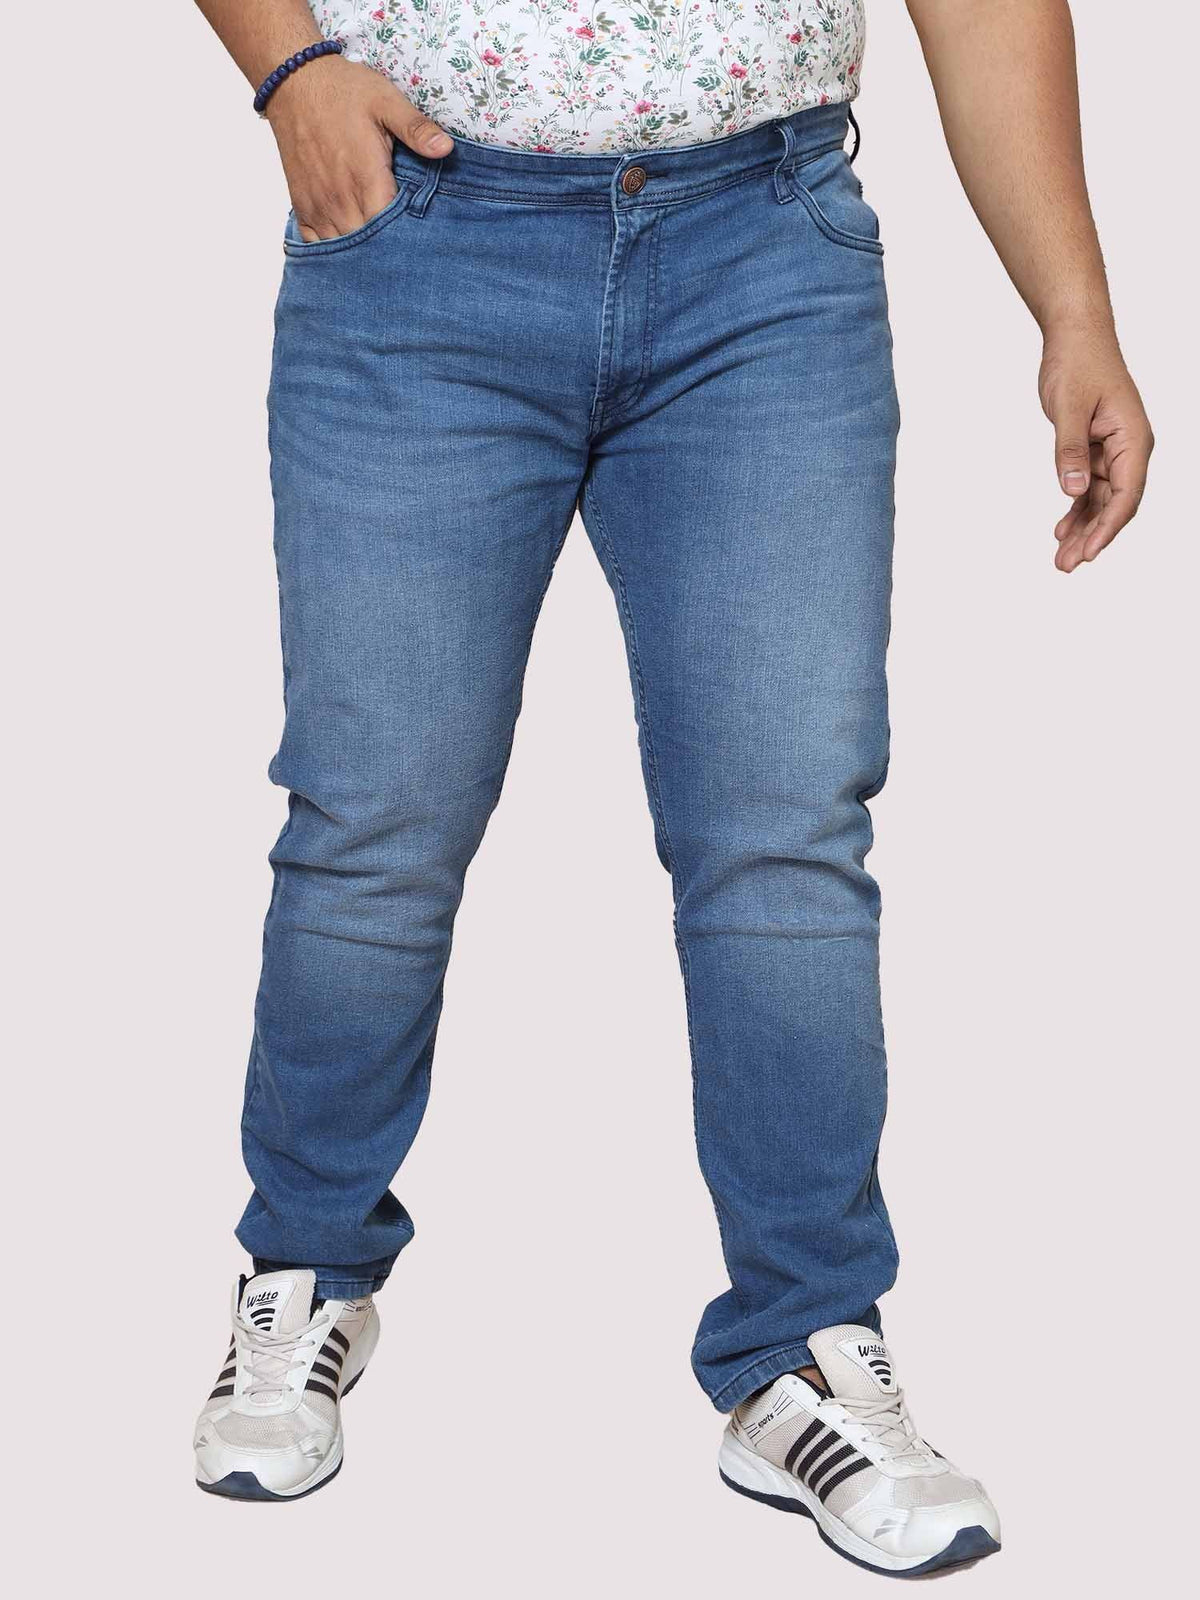 Azure Blue Jeans Men's Plus Size - Guniaa Fashions